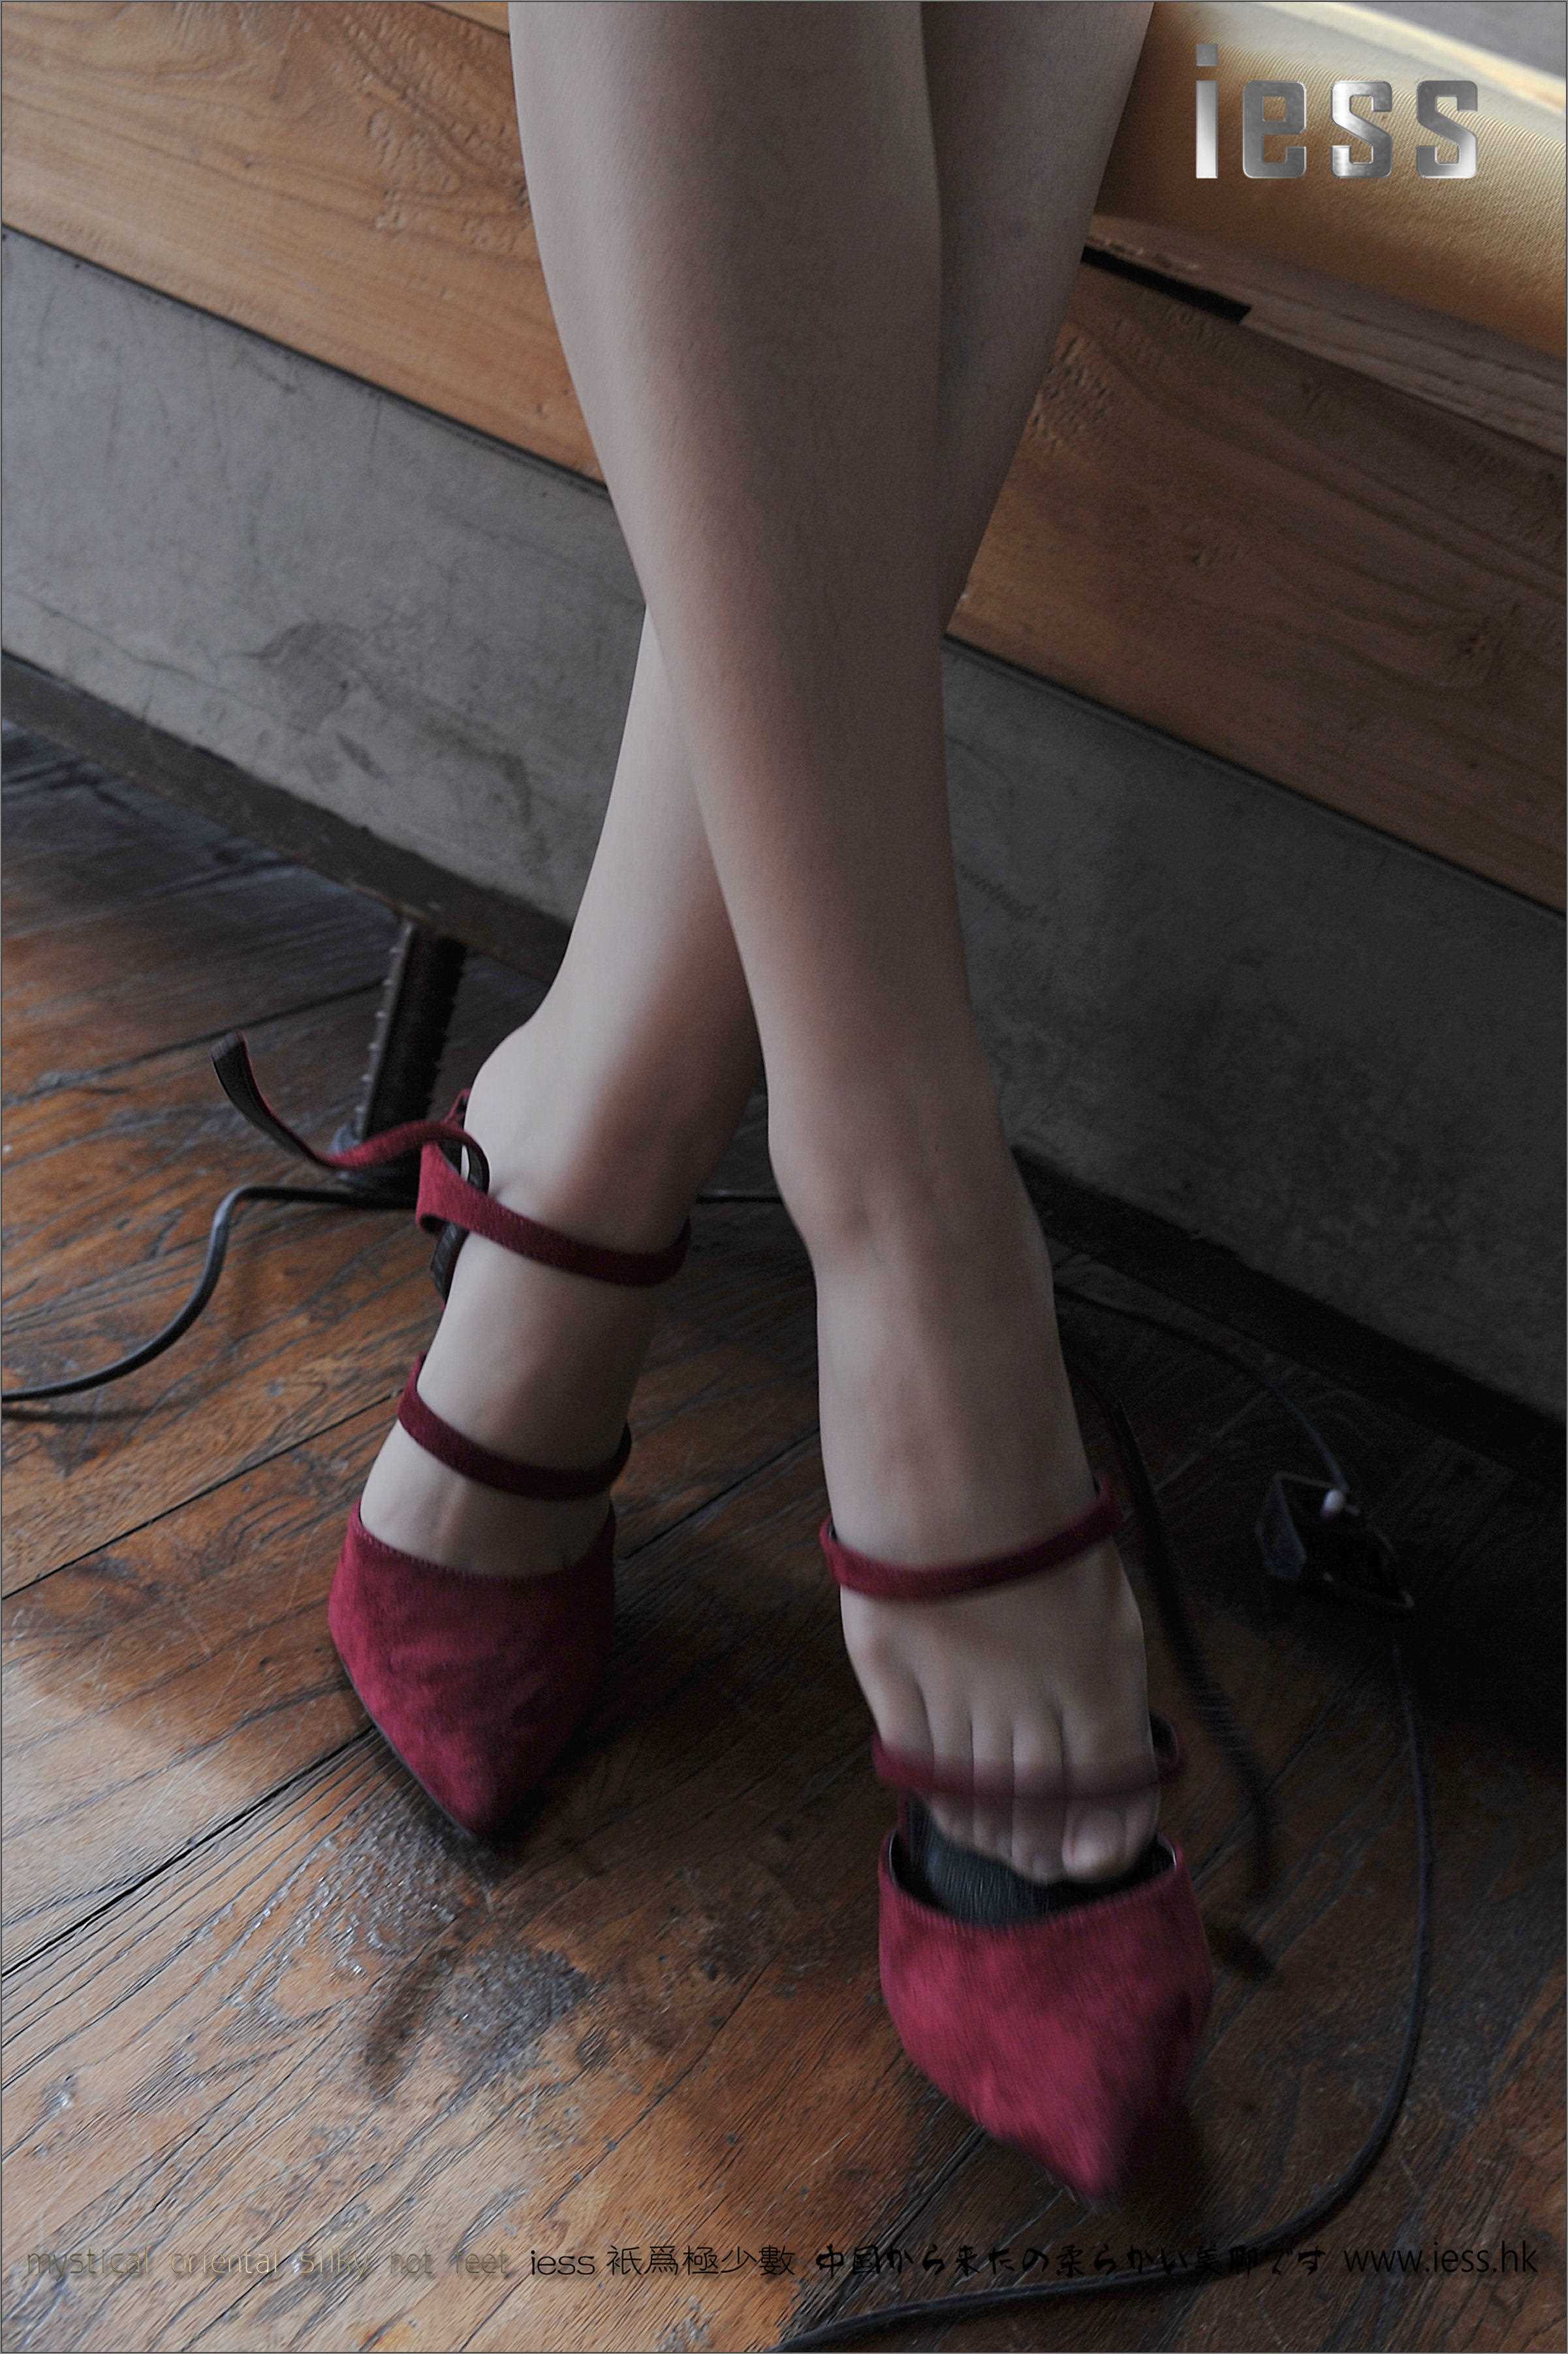 China Beauty Legs and feet 163